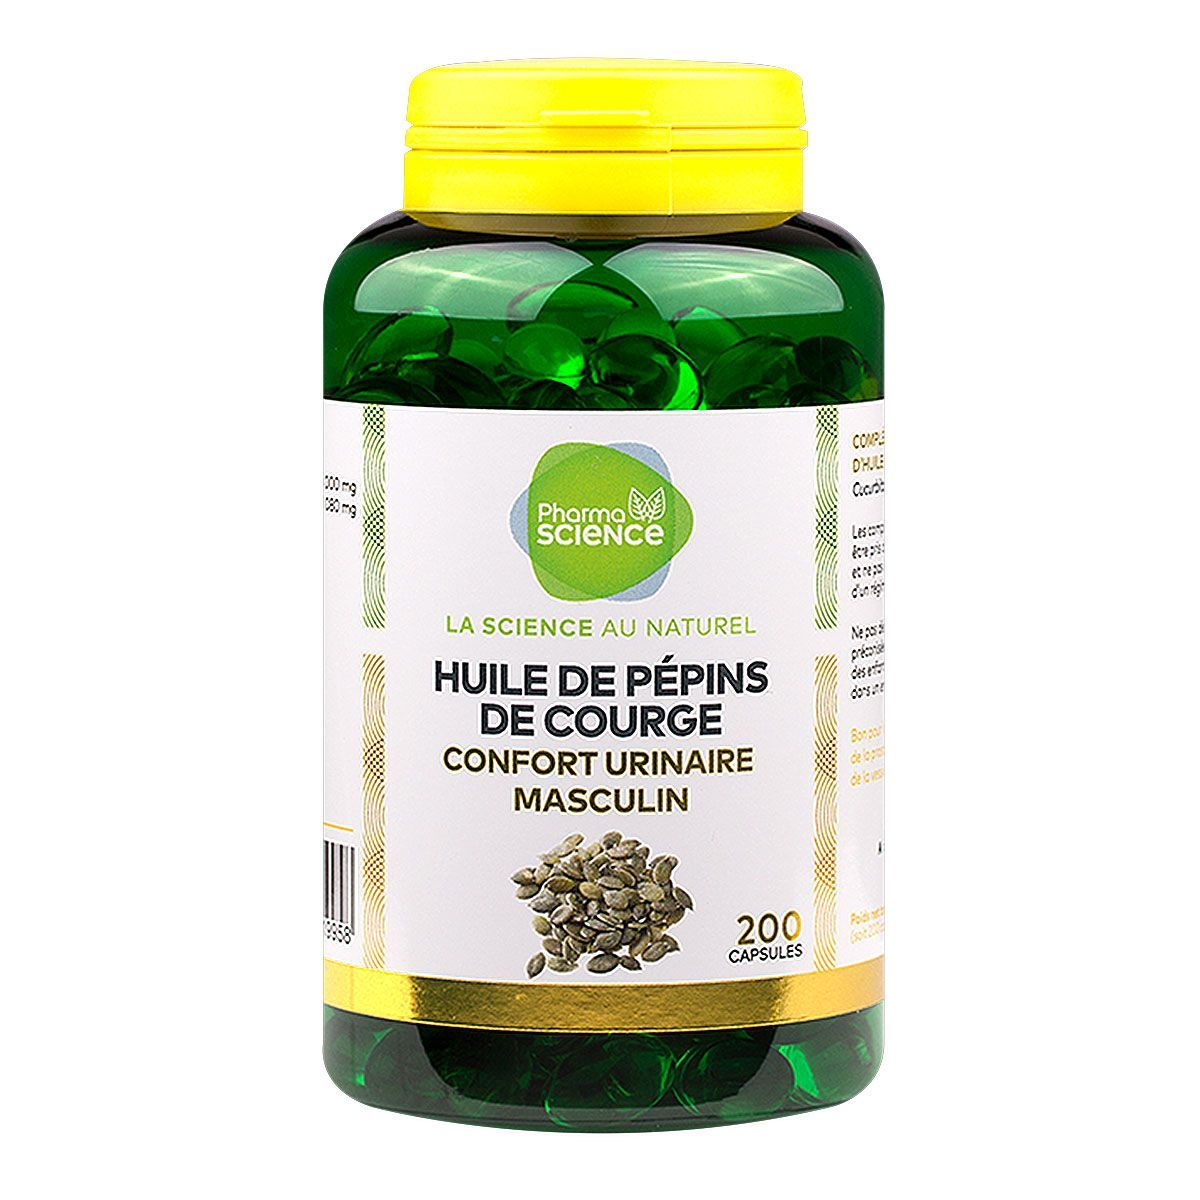 https://www.pharmaforce.fr/resize/600x600/media/finish/img/normal/62/3535400019958-huile-de-pepins-de-courge-200-capsules-2x.jpg